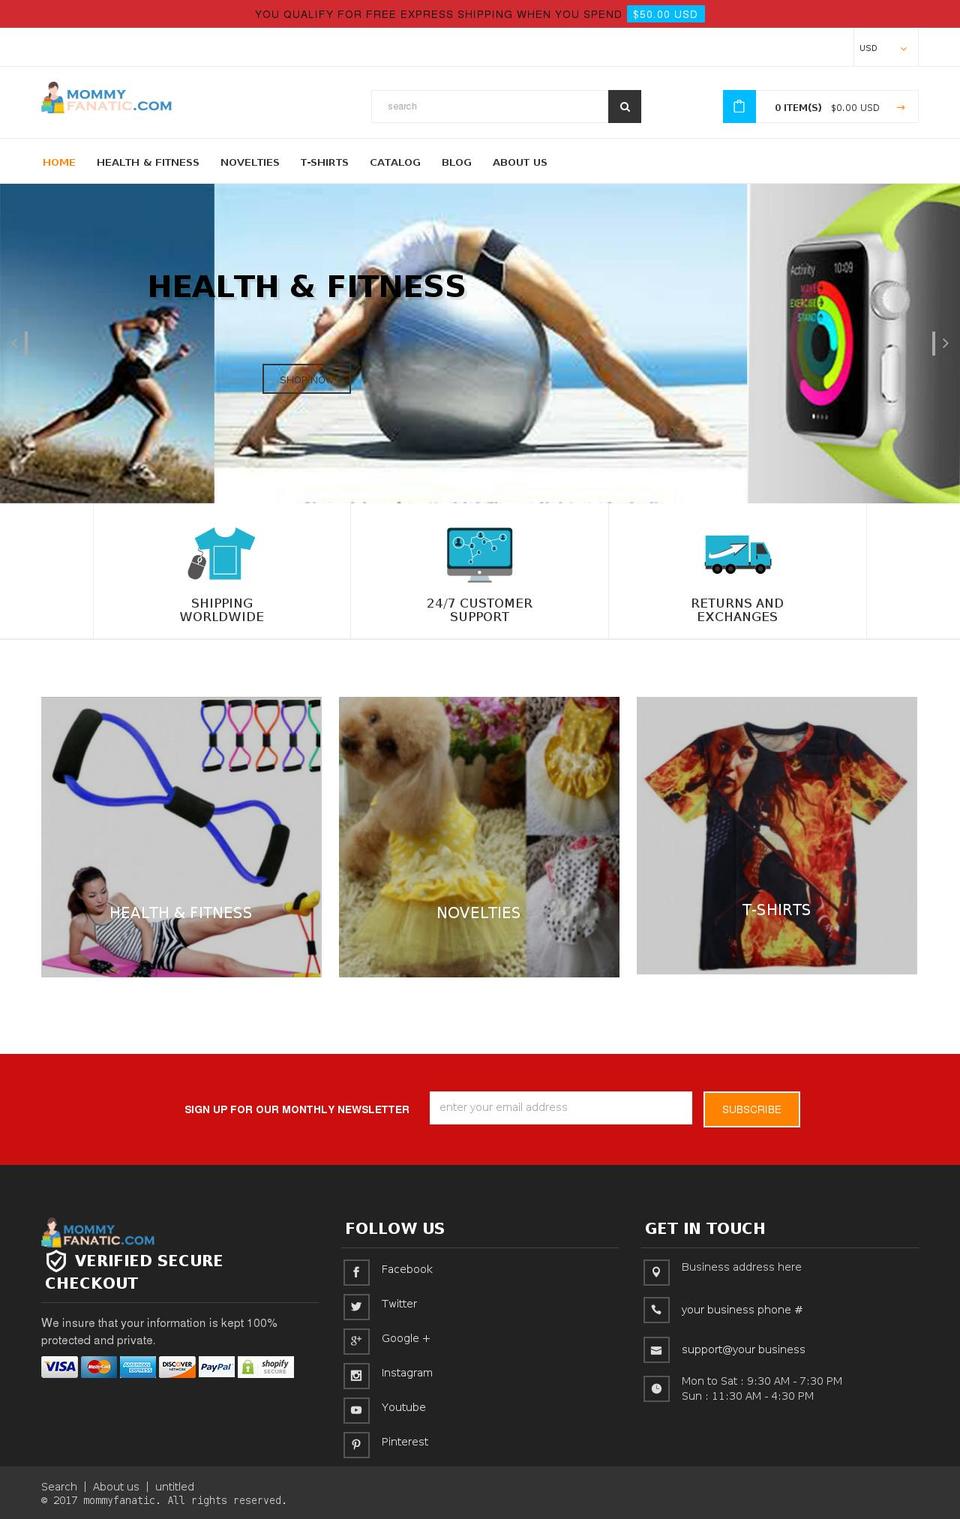 mommyfanatic.com shopify website screenshot